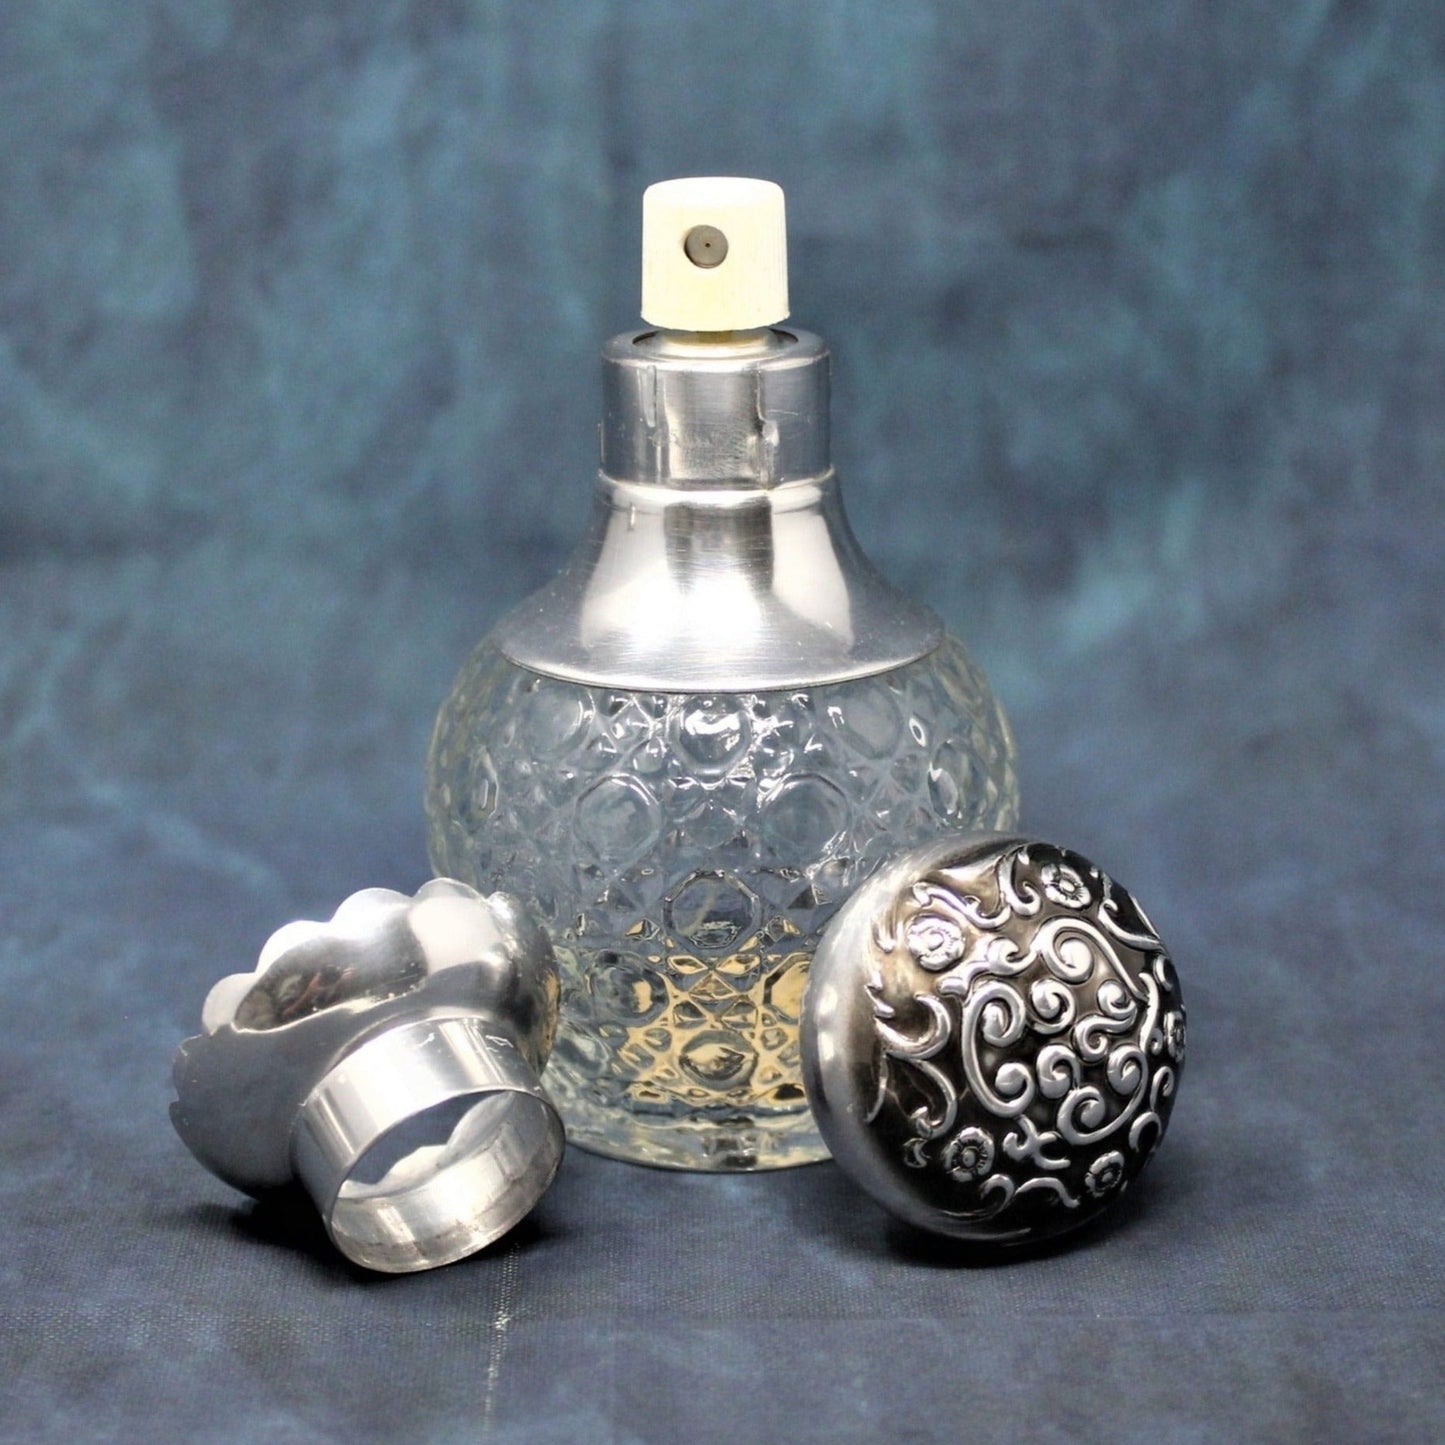 Perfume Bottle, Avon, Hana Gasa Spray Glass & Metal Top, Vintage